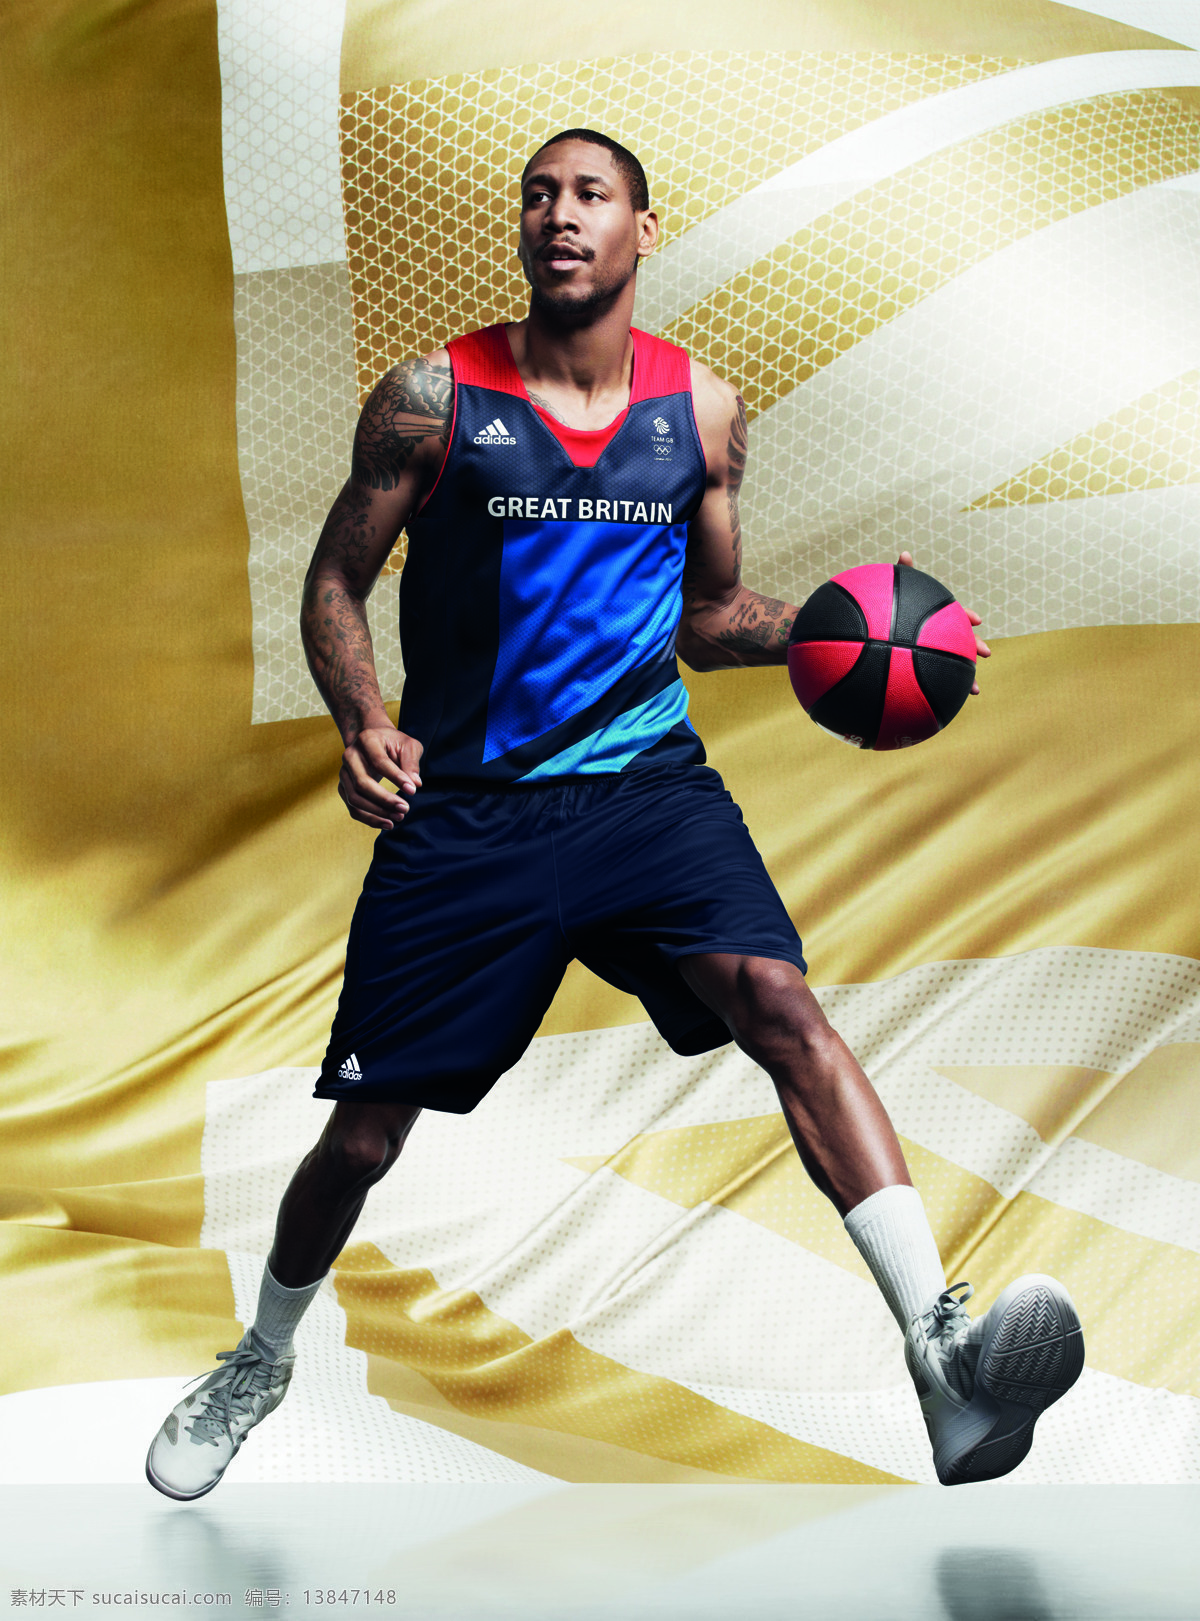 adidas 英国队 奥运 装备 展示 篮球 平面广告 英国代表队 奥运装备展示 体育运动 文化艺术